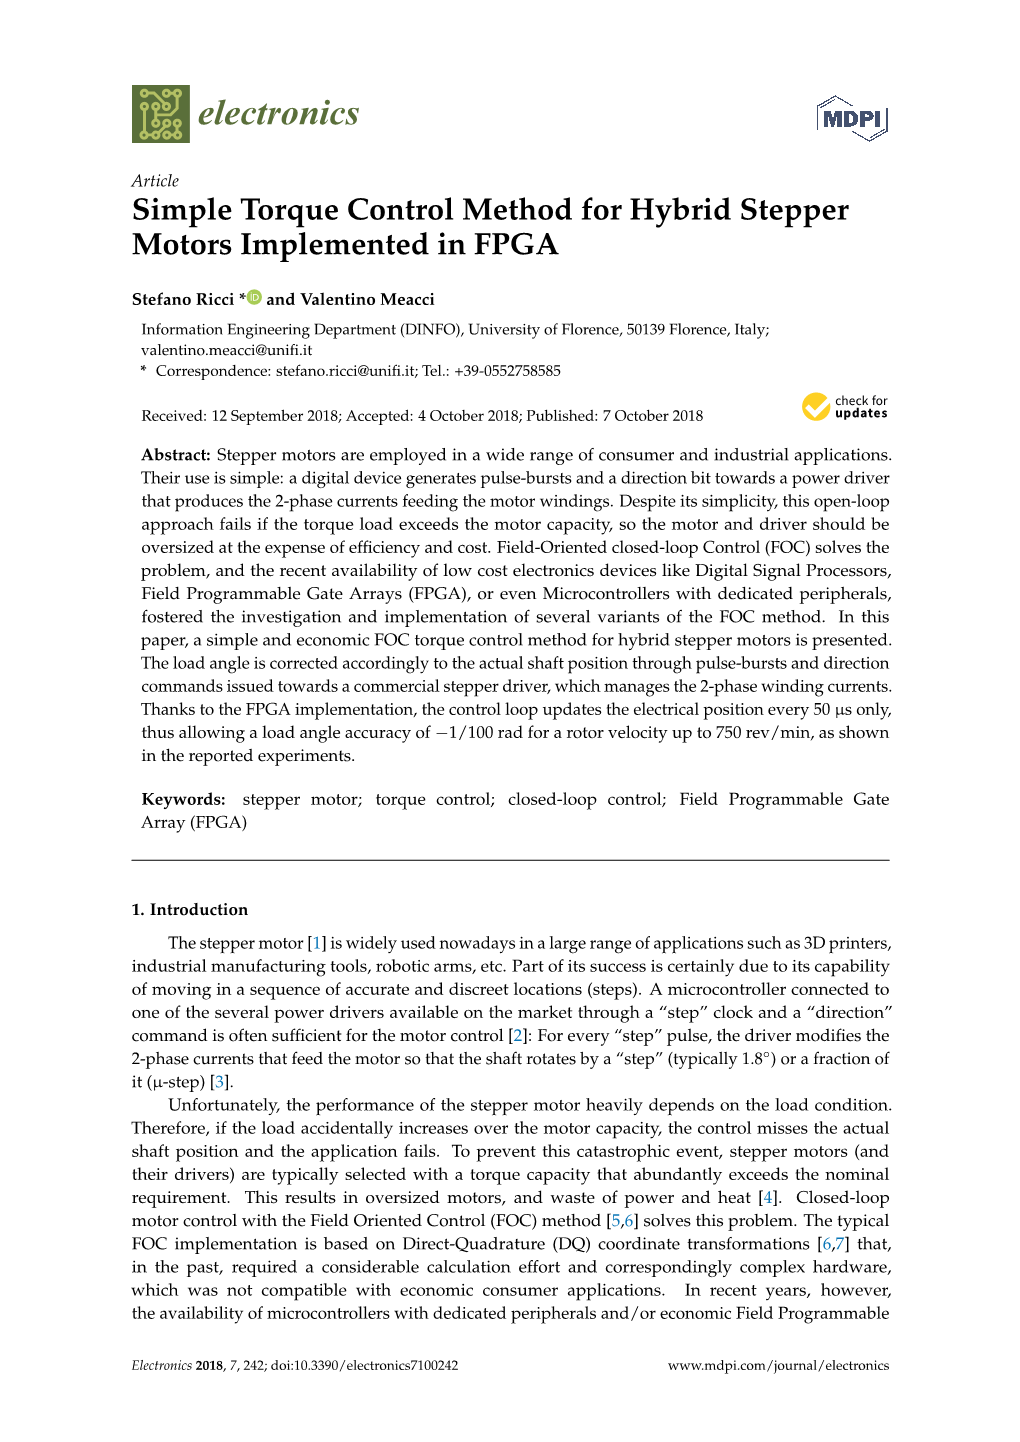 Simple Torque Control Method for Hybrid Stepper Motors Implemented in FPGA